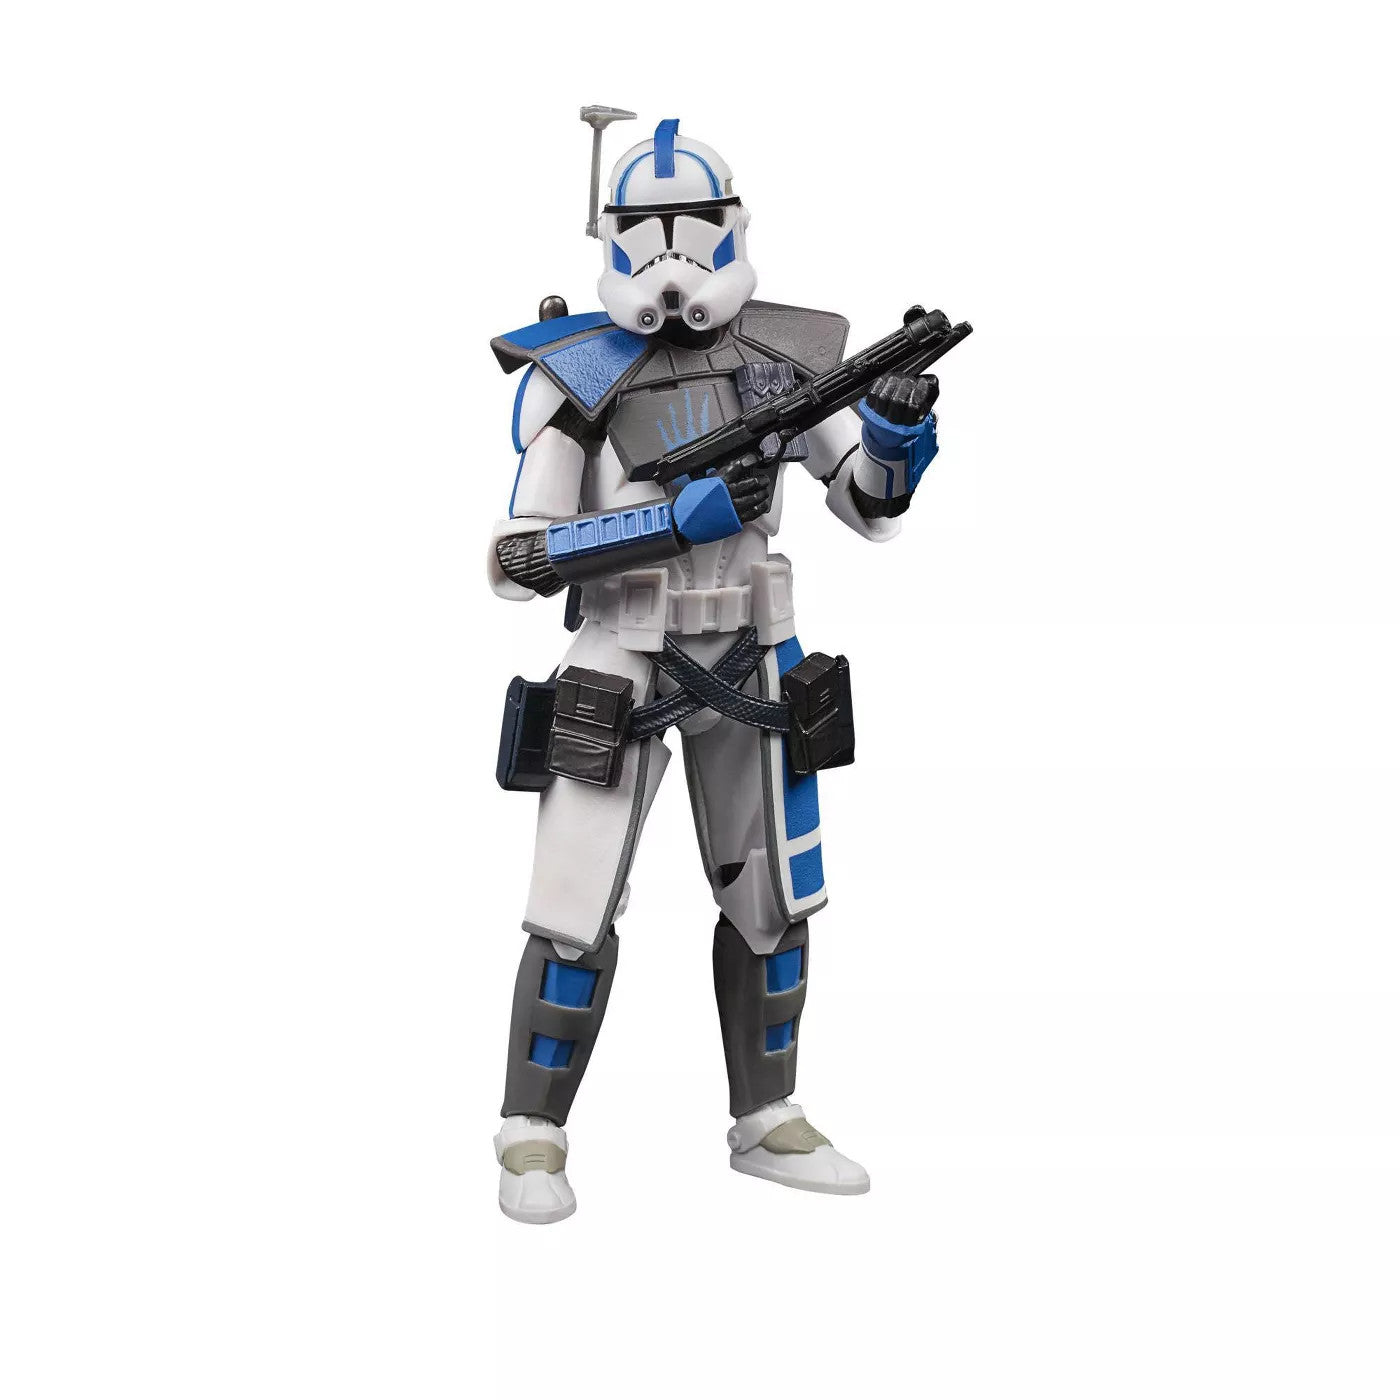 Arc Trooper Black Series Action Figure - Star Wars: The Clone Wars